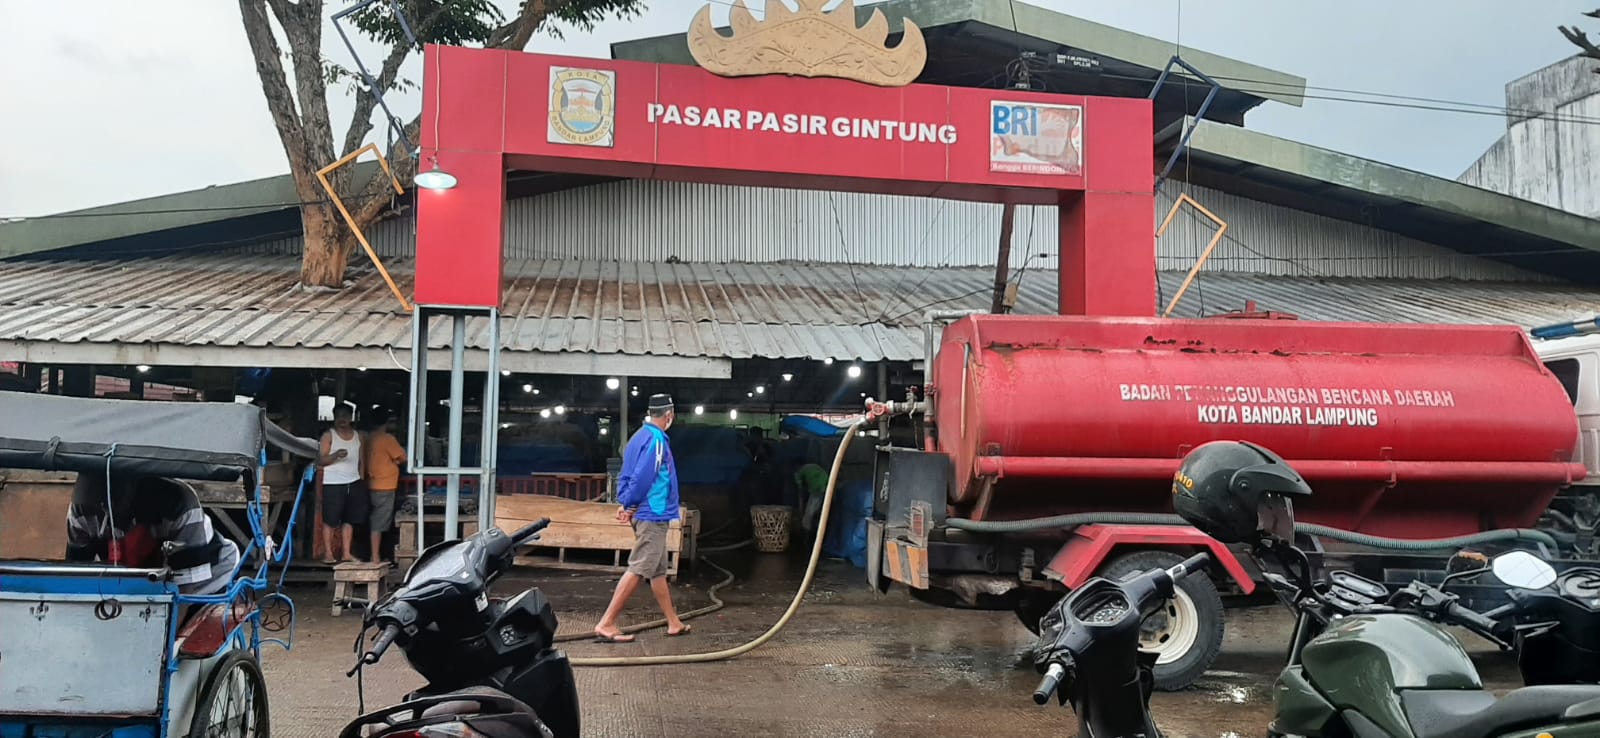 Hendak Dikunjungi Jokowi, Pasar Pasir Gintung Seketika 'Berubah Wajah'